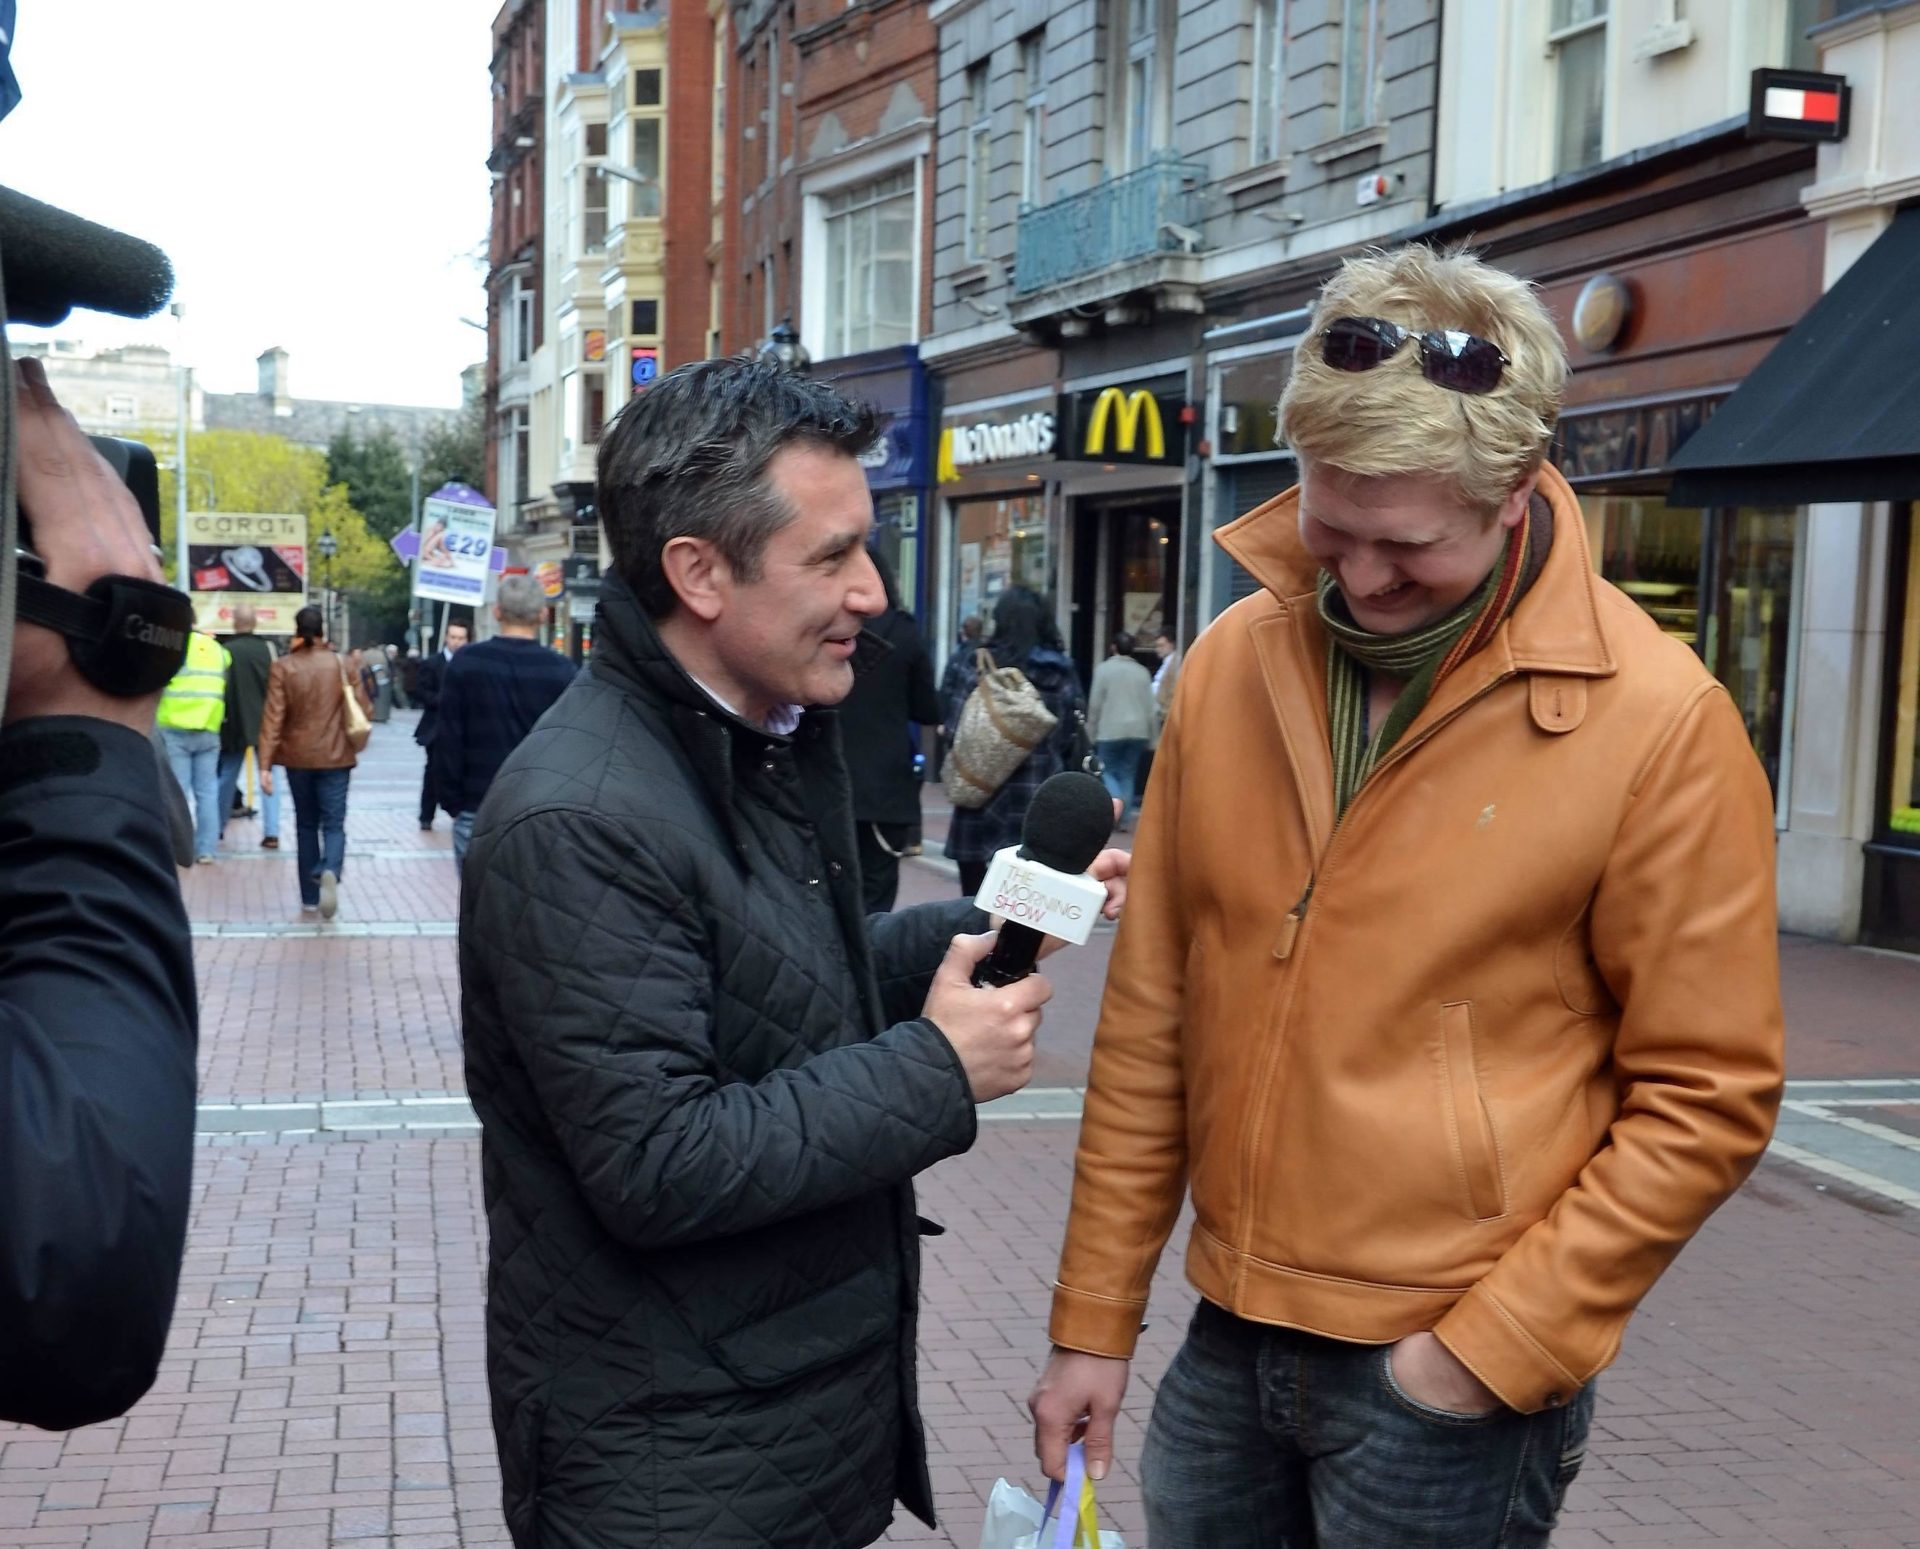 Martin King interviewing shoppers on Grafton Street Dublin. 30.03.11.